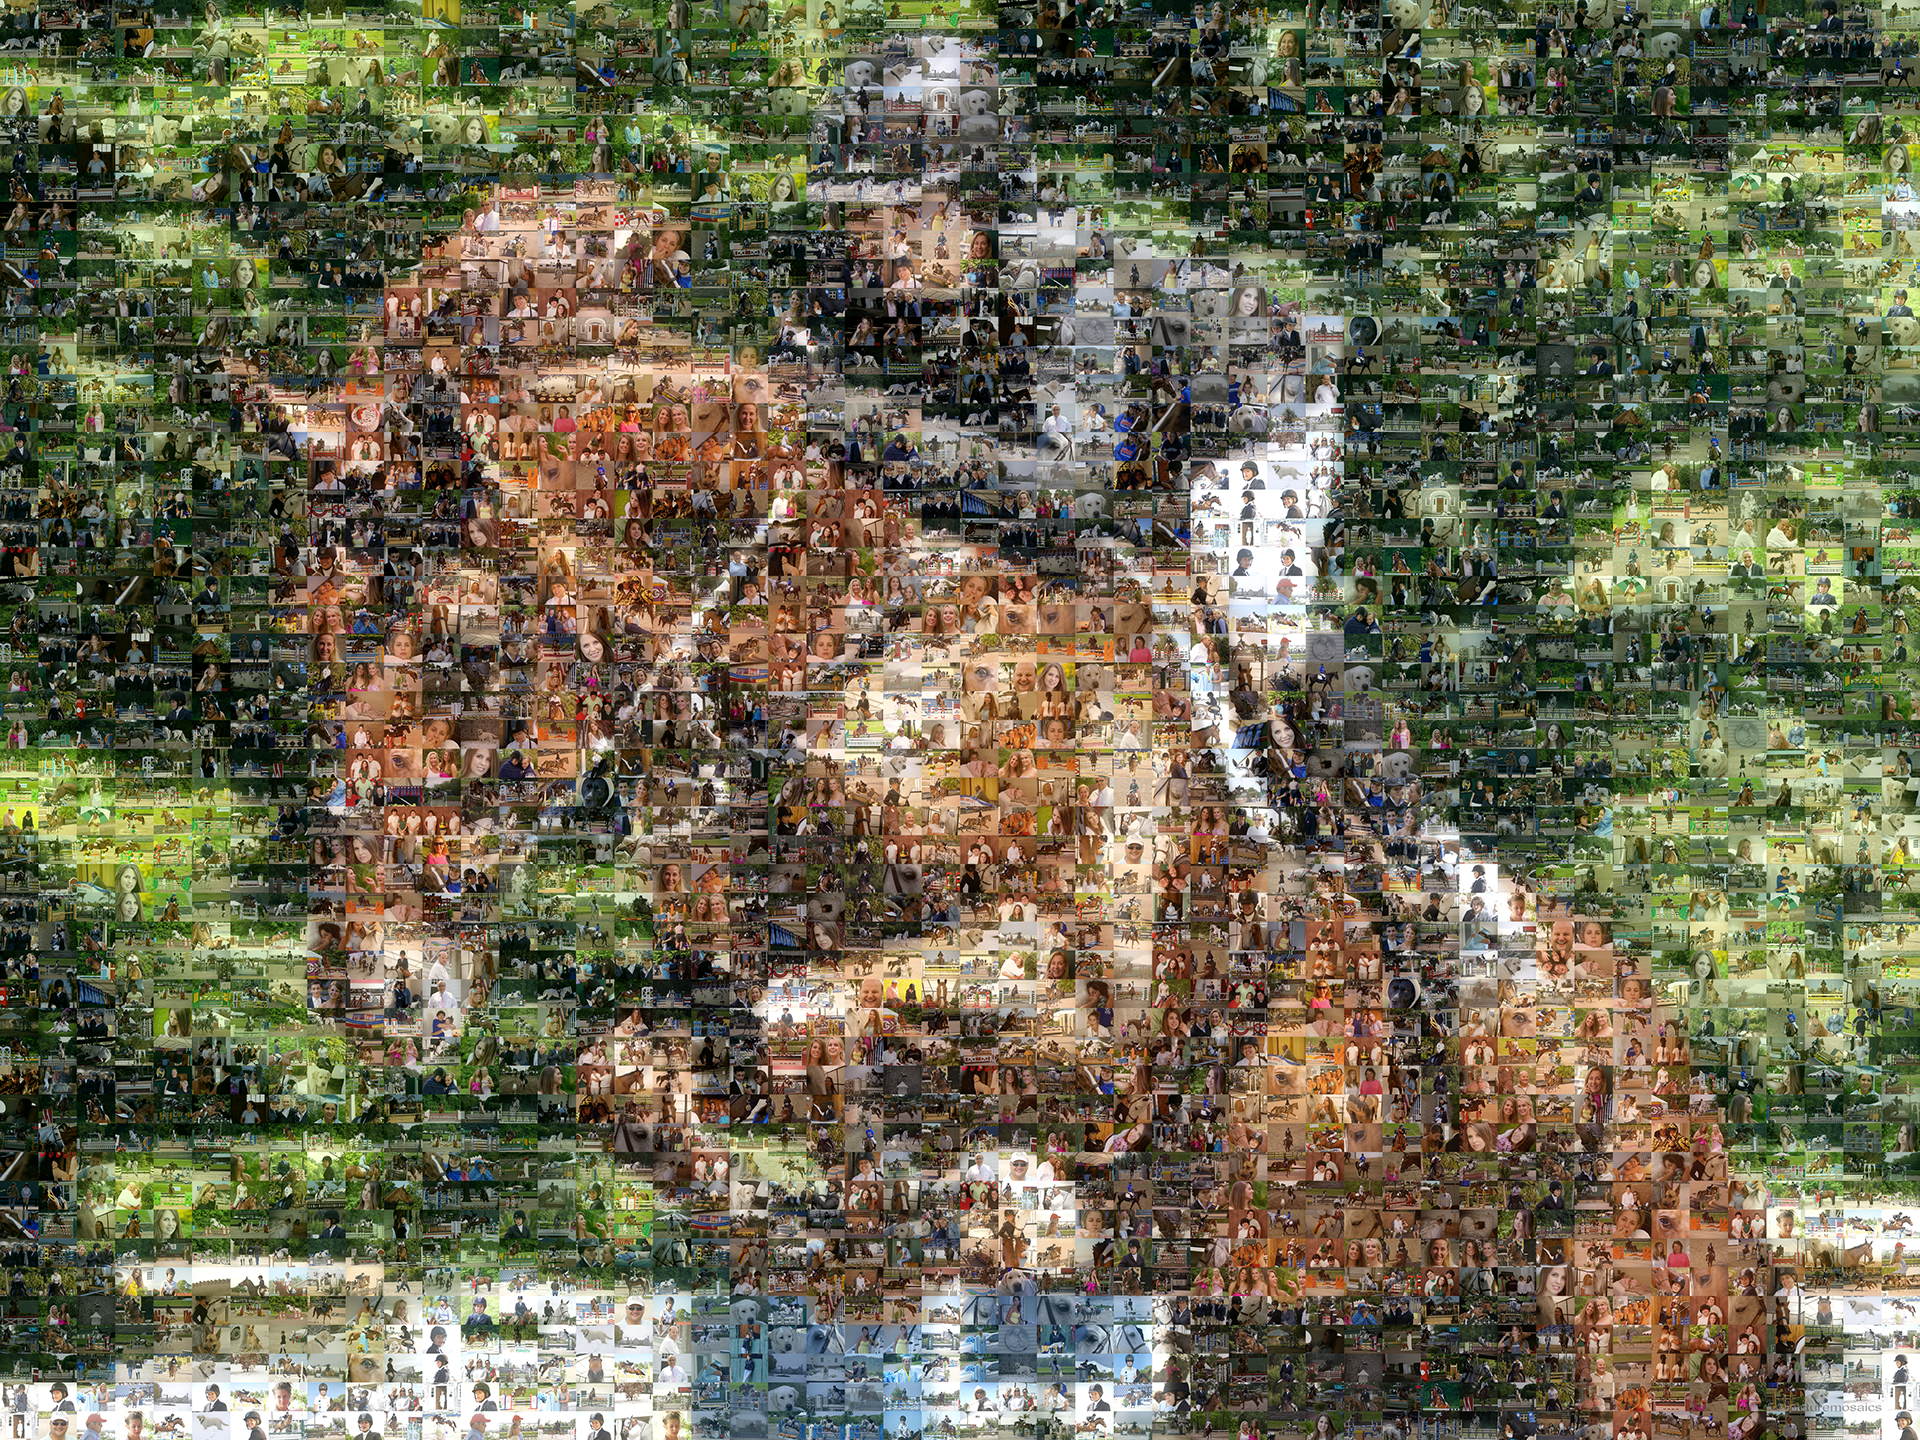 photo mosaic created using 427 family photos